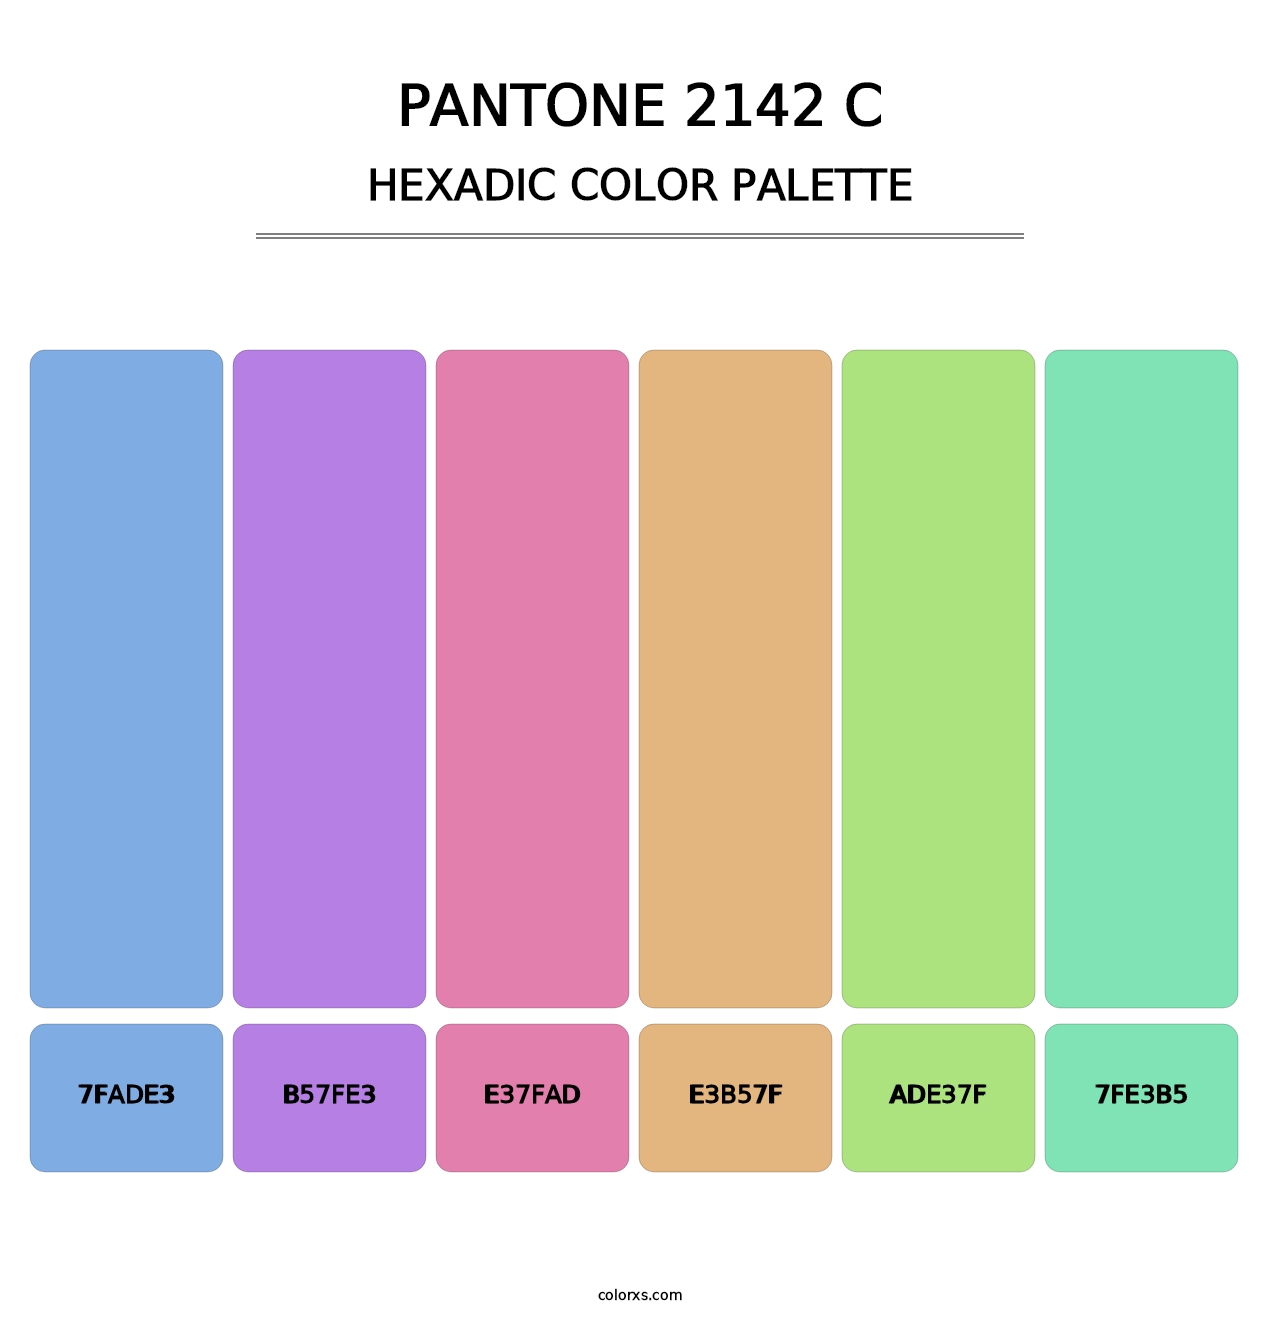 PANTONE 2142 C - Hexadic Color Palette